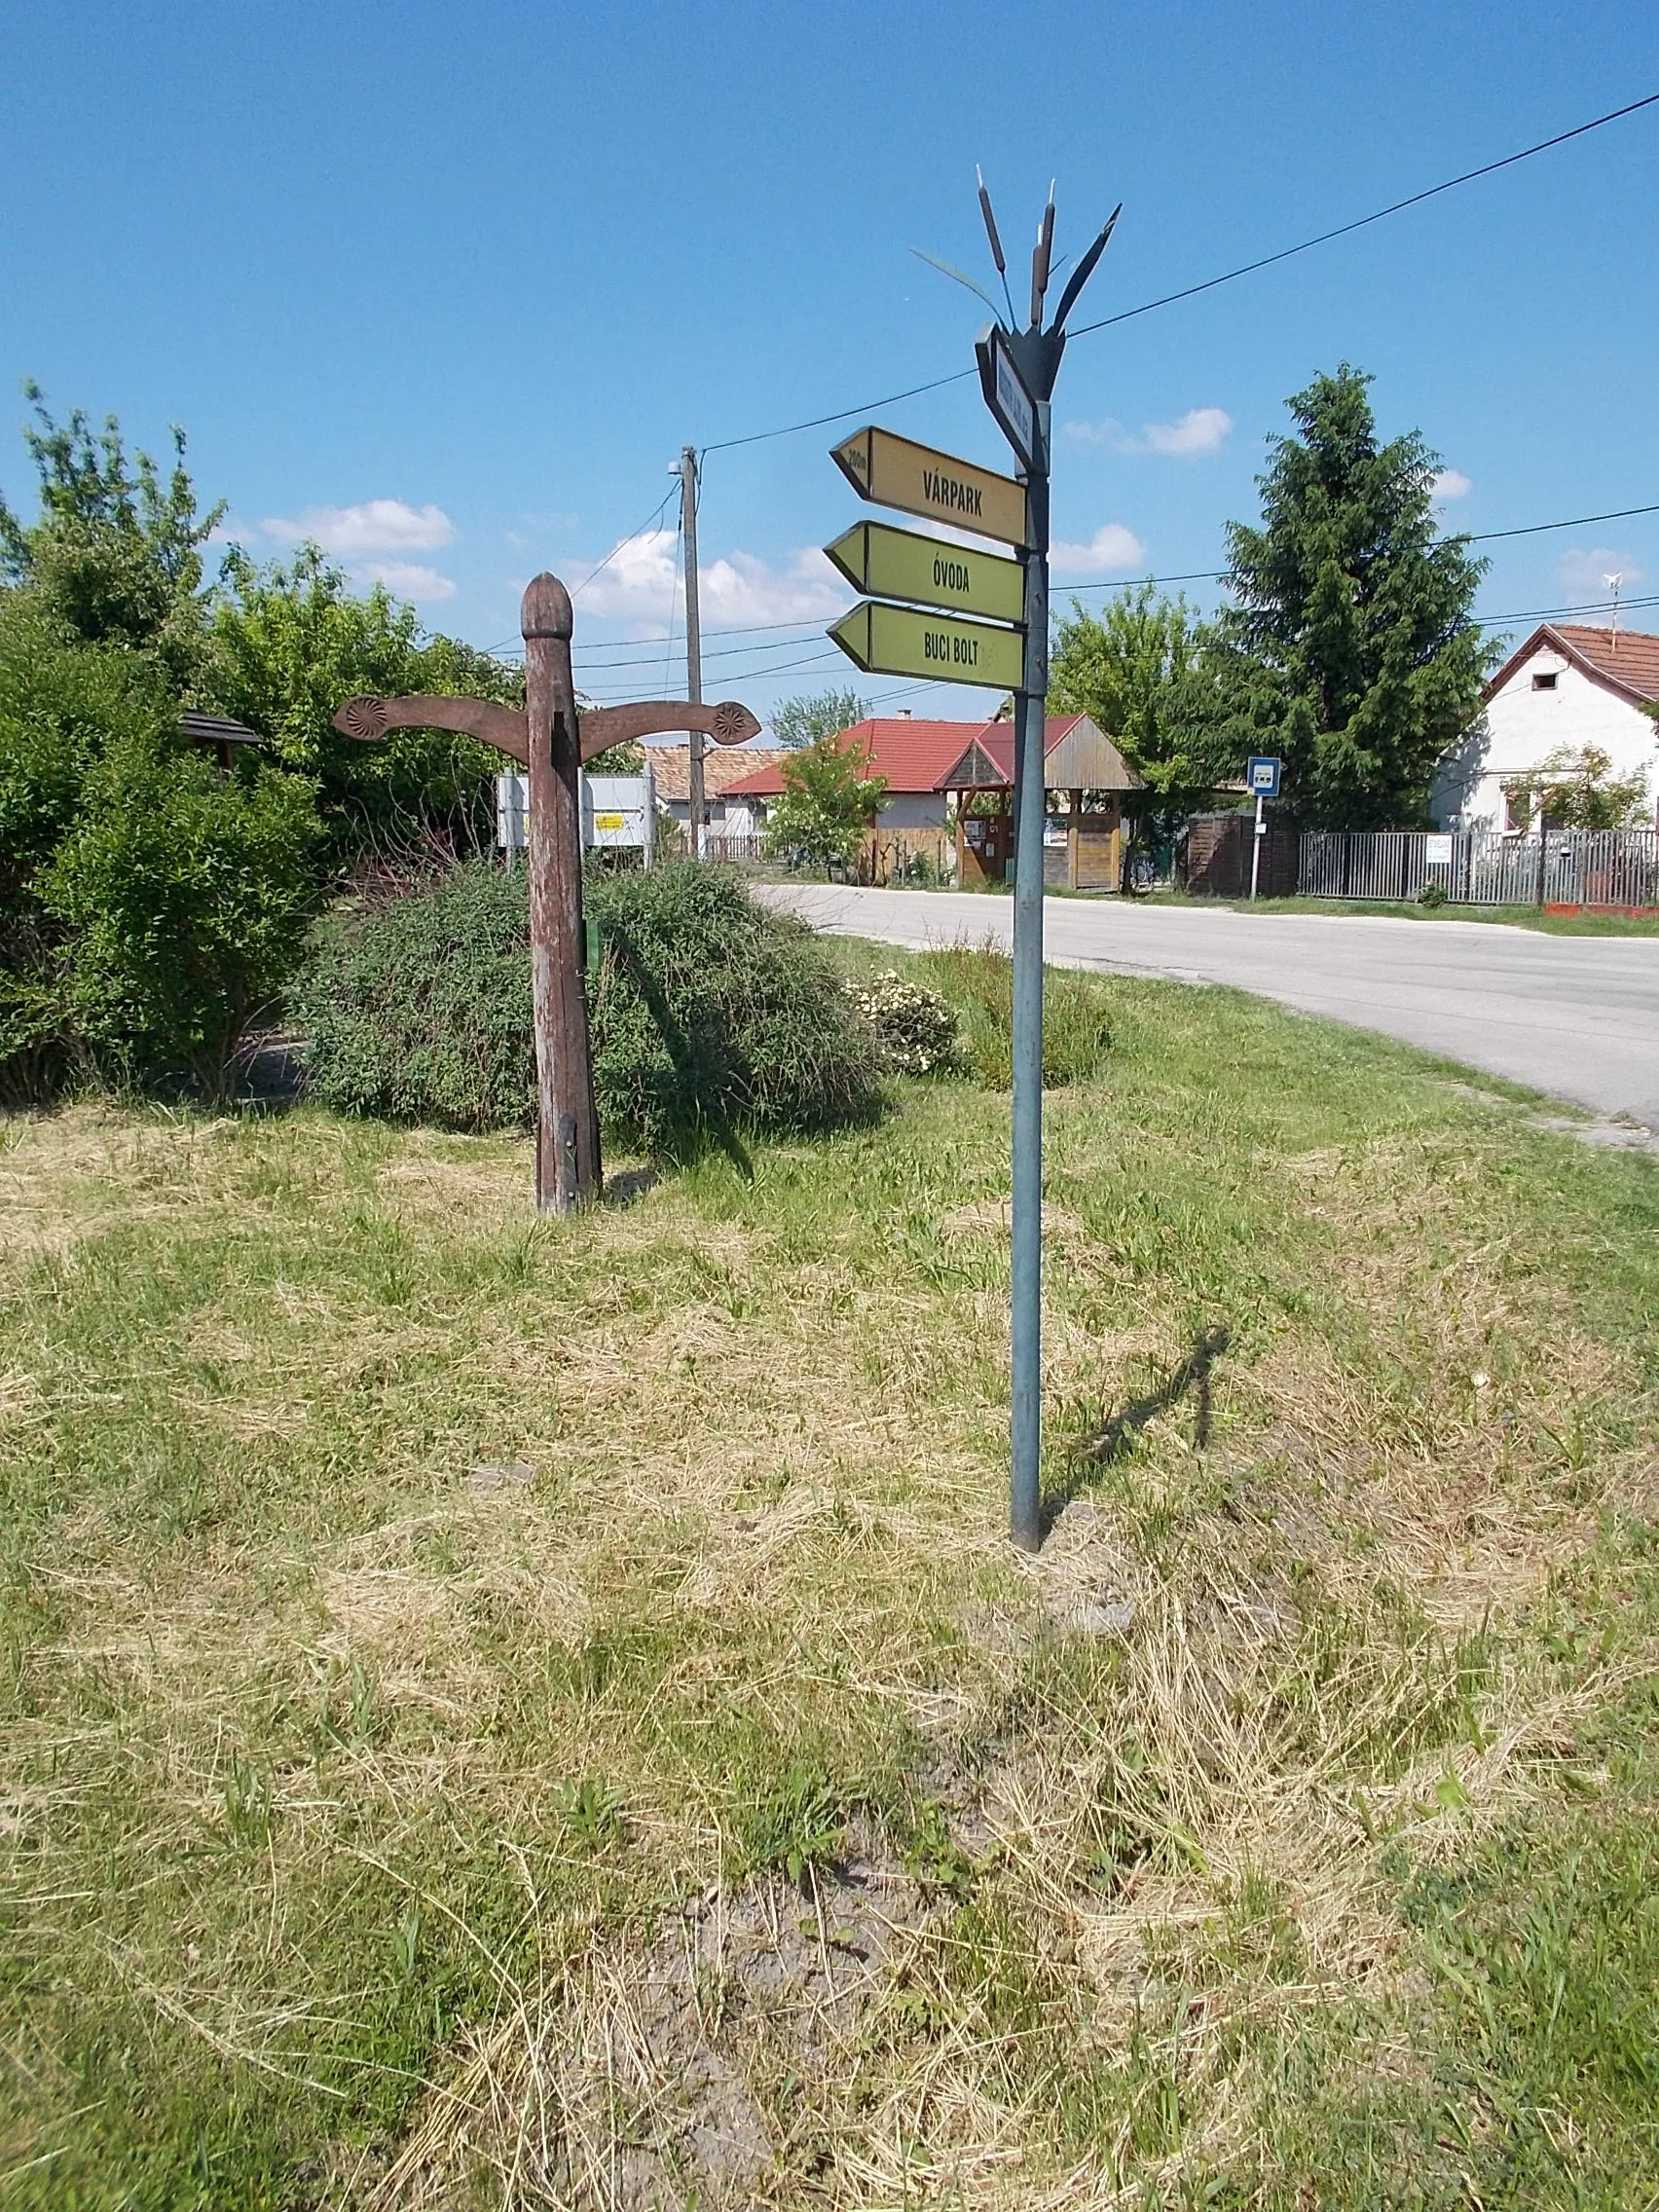 Photo showing: : Birdsong Nature Trail and other signs. Bus stop- Gárdonyi Street, Kossuth Street, Dinnyés quarter, Fejér County, Hungary.